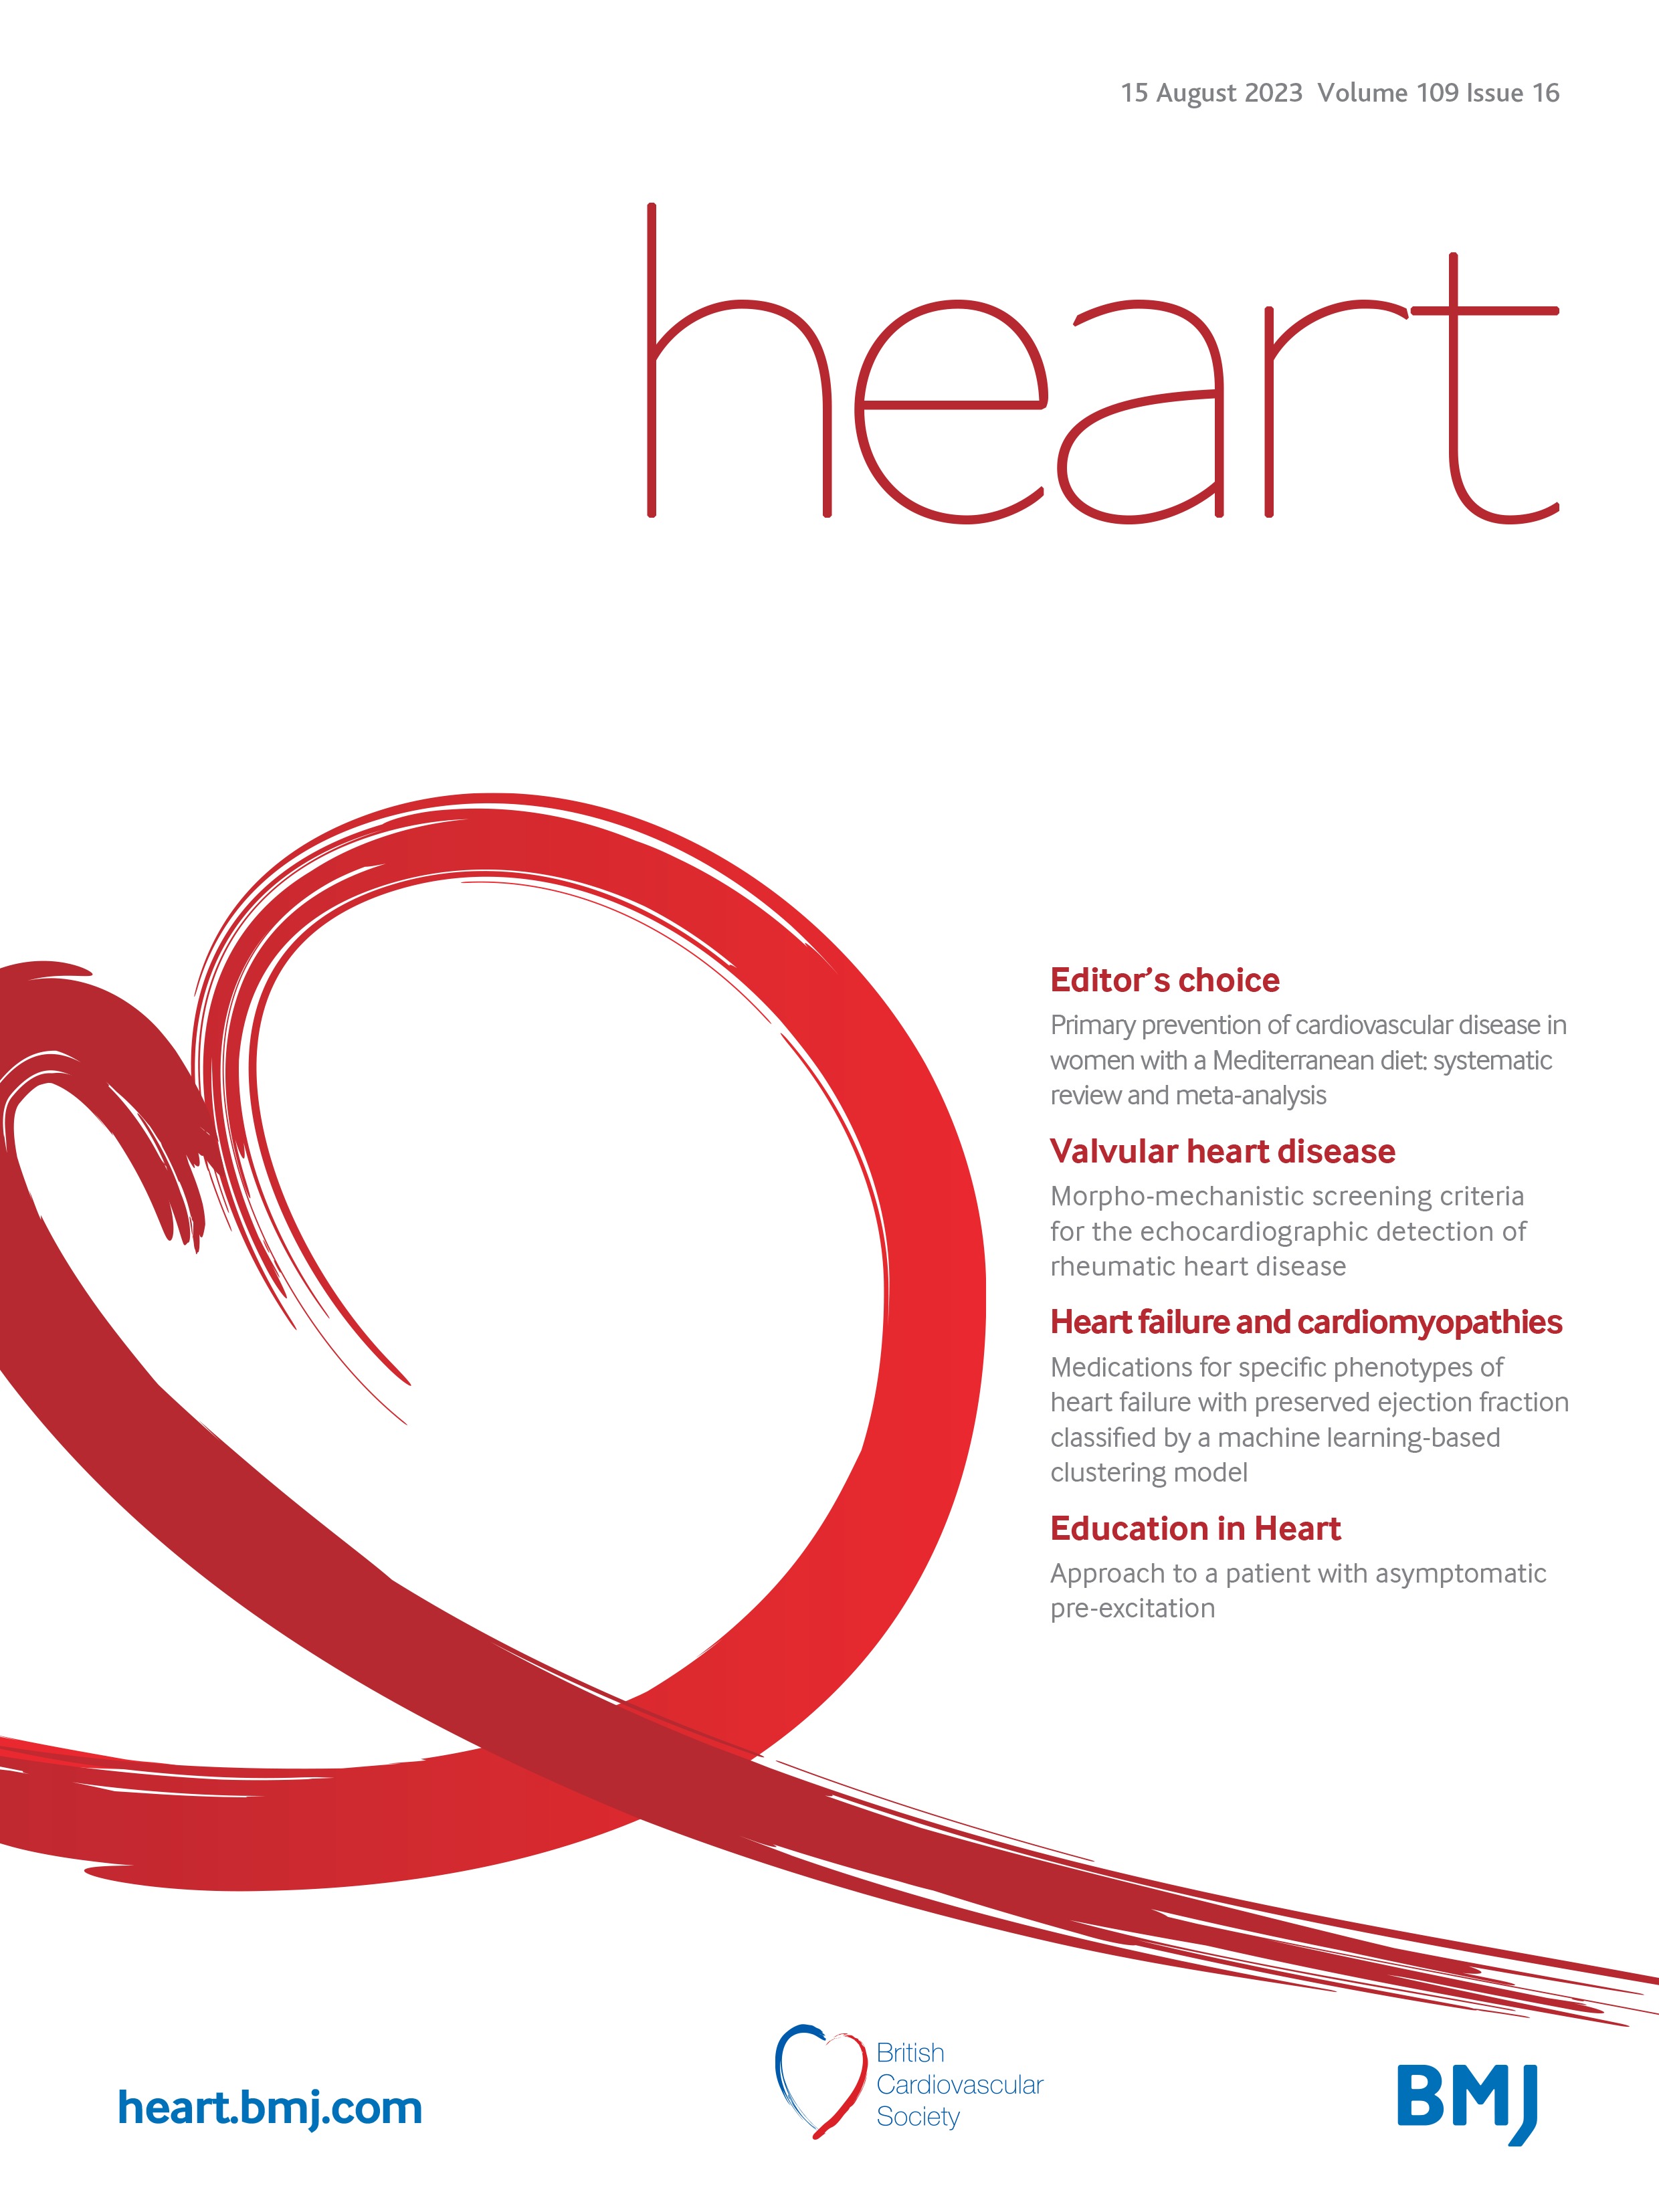 Morpho-mechanistic screening criteria for the echocardiographic detection of rheumatic heart disease